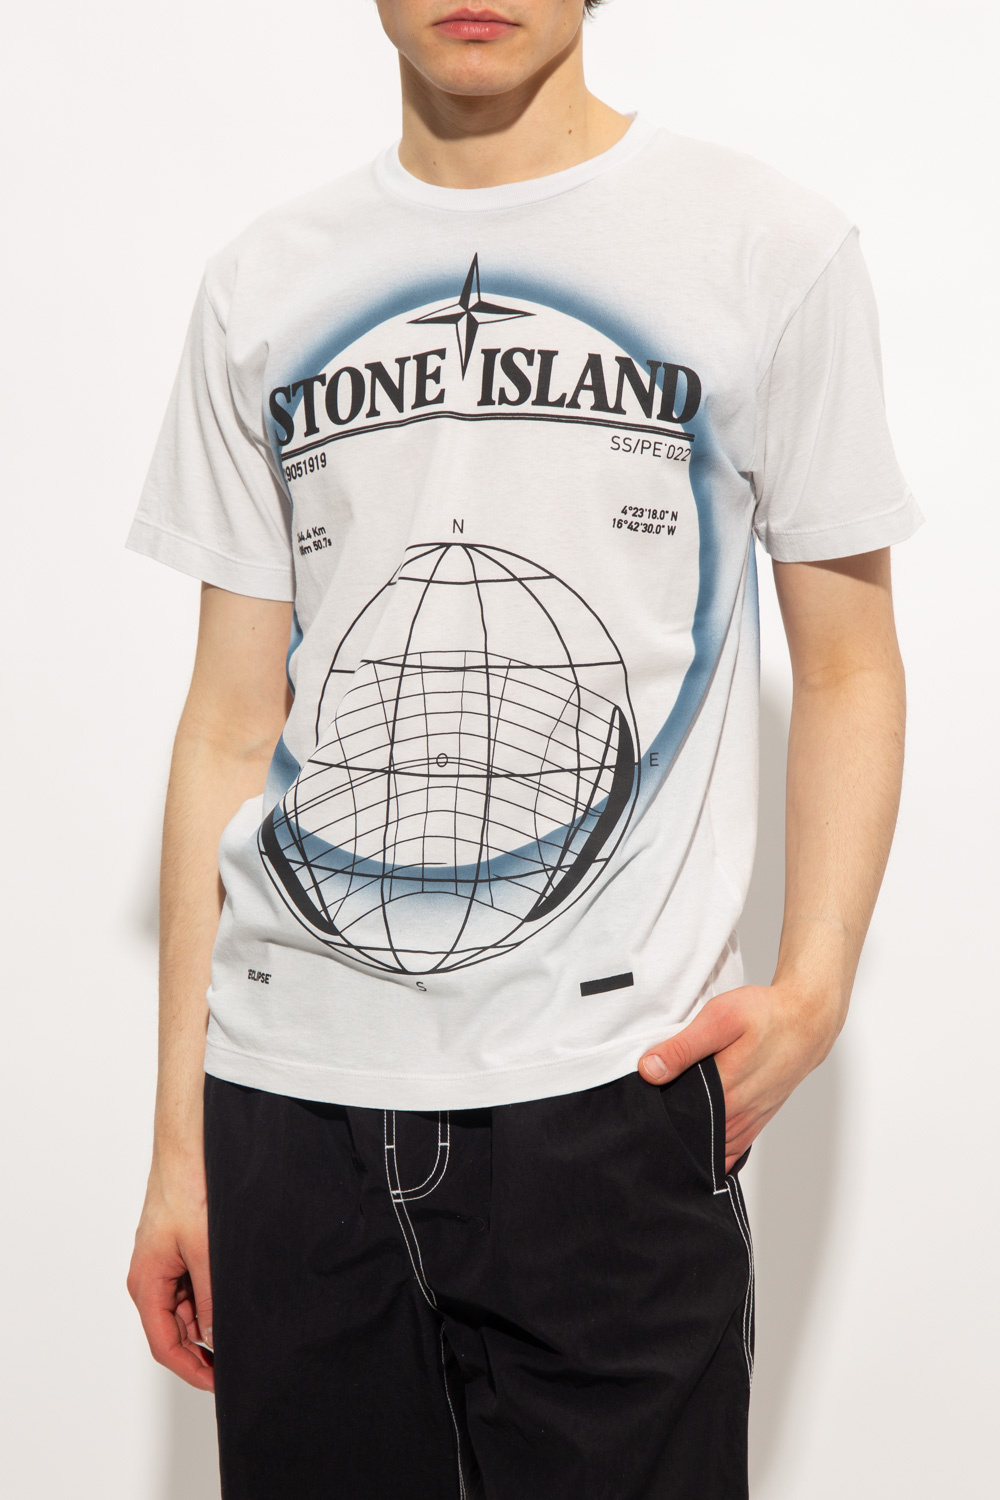 Stone Island RAF SIMONS Tour Date-print T-shirt